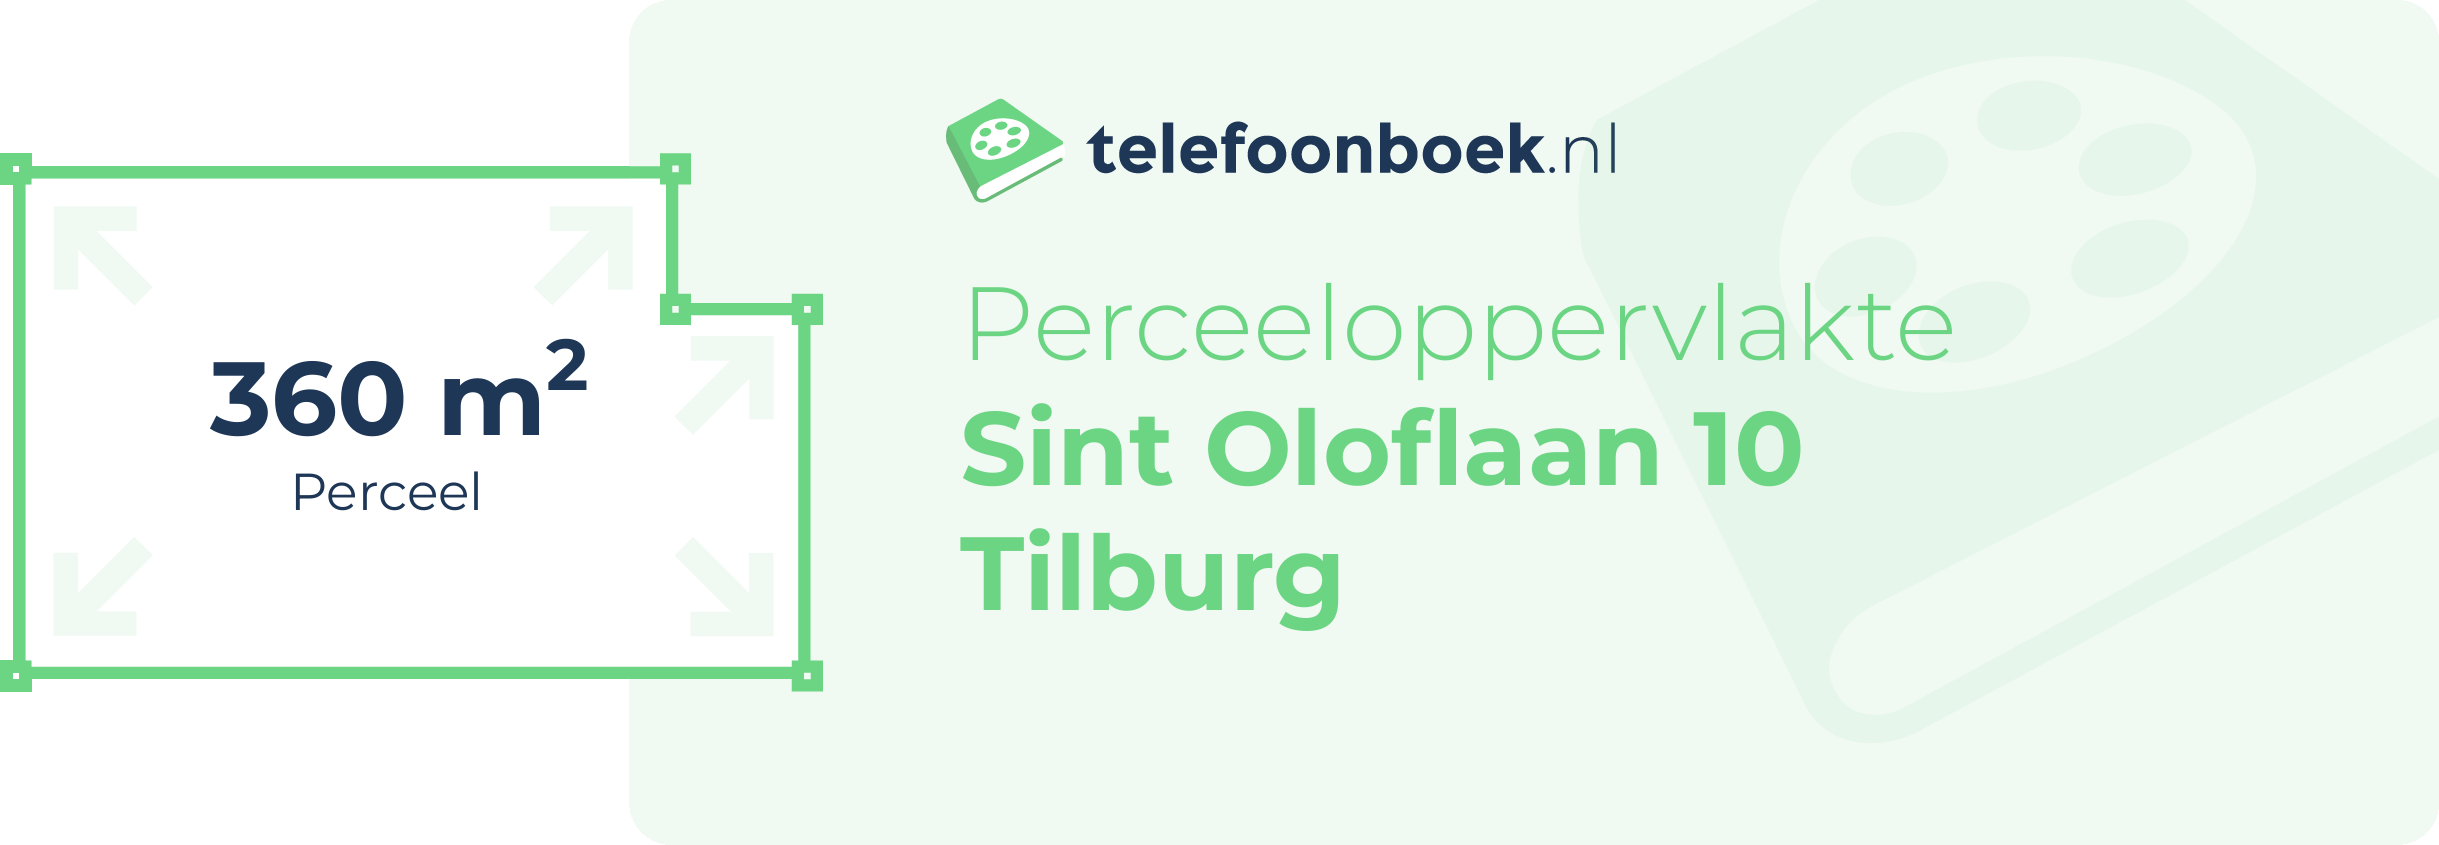 Perceeloppervlakte Sint Oloflaan 10 Tilburg